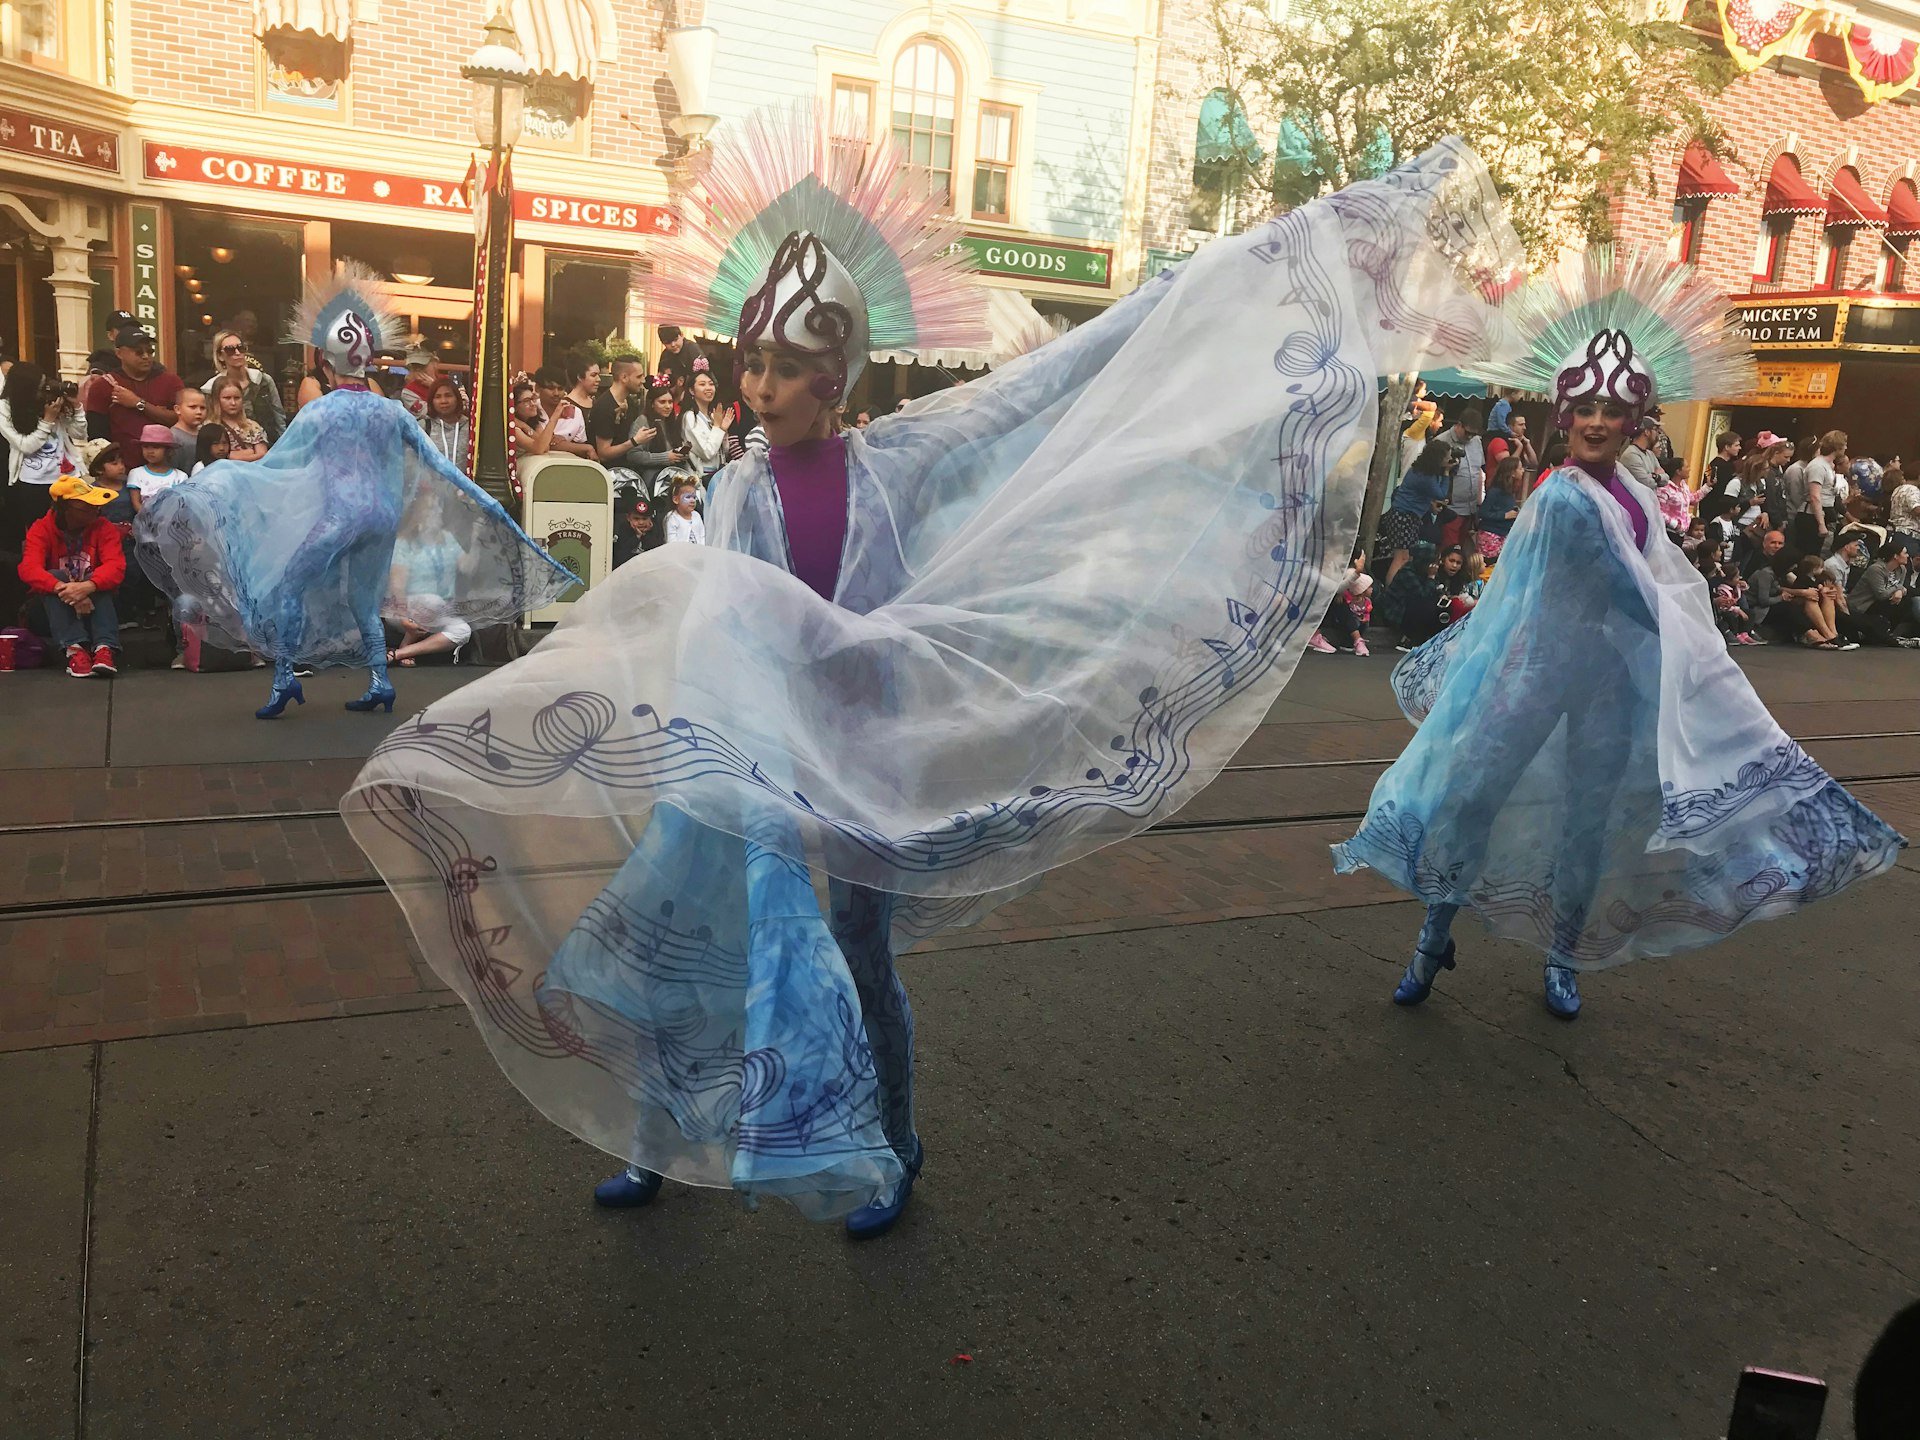 dancers entertain a crowd during a parade at Disneyland, California